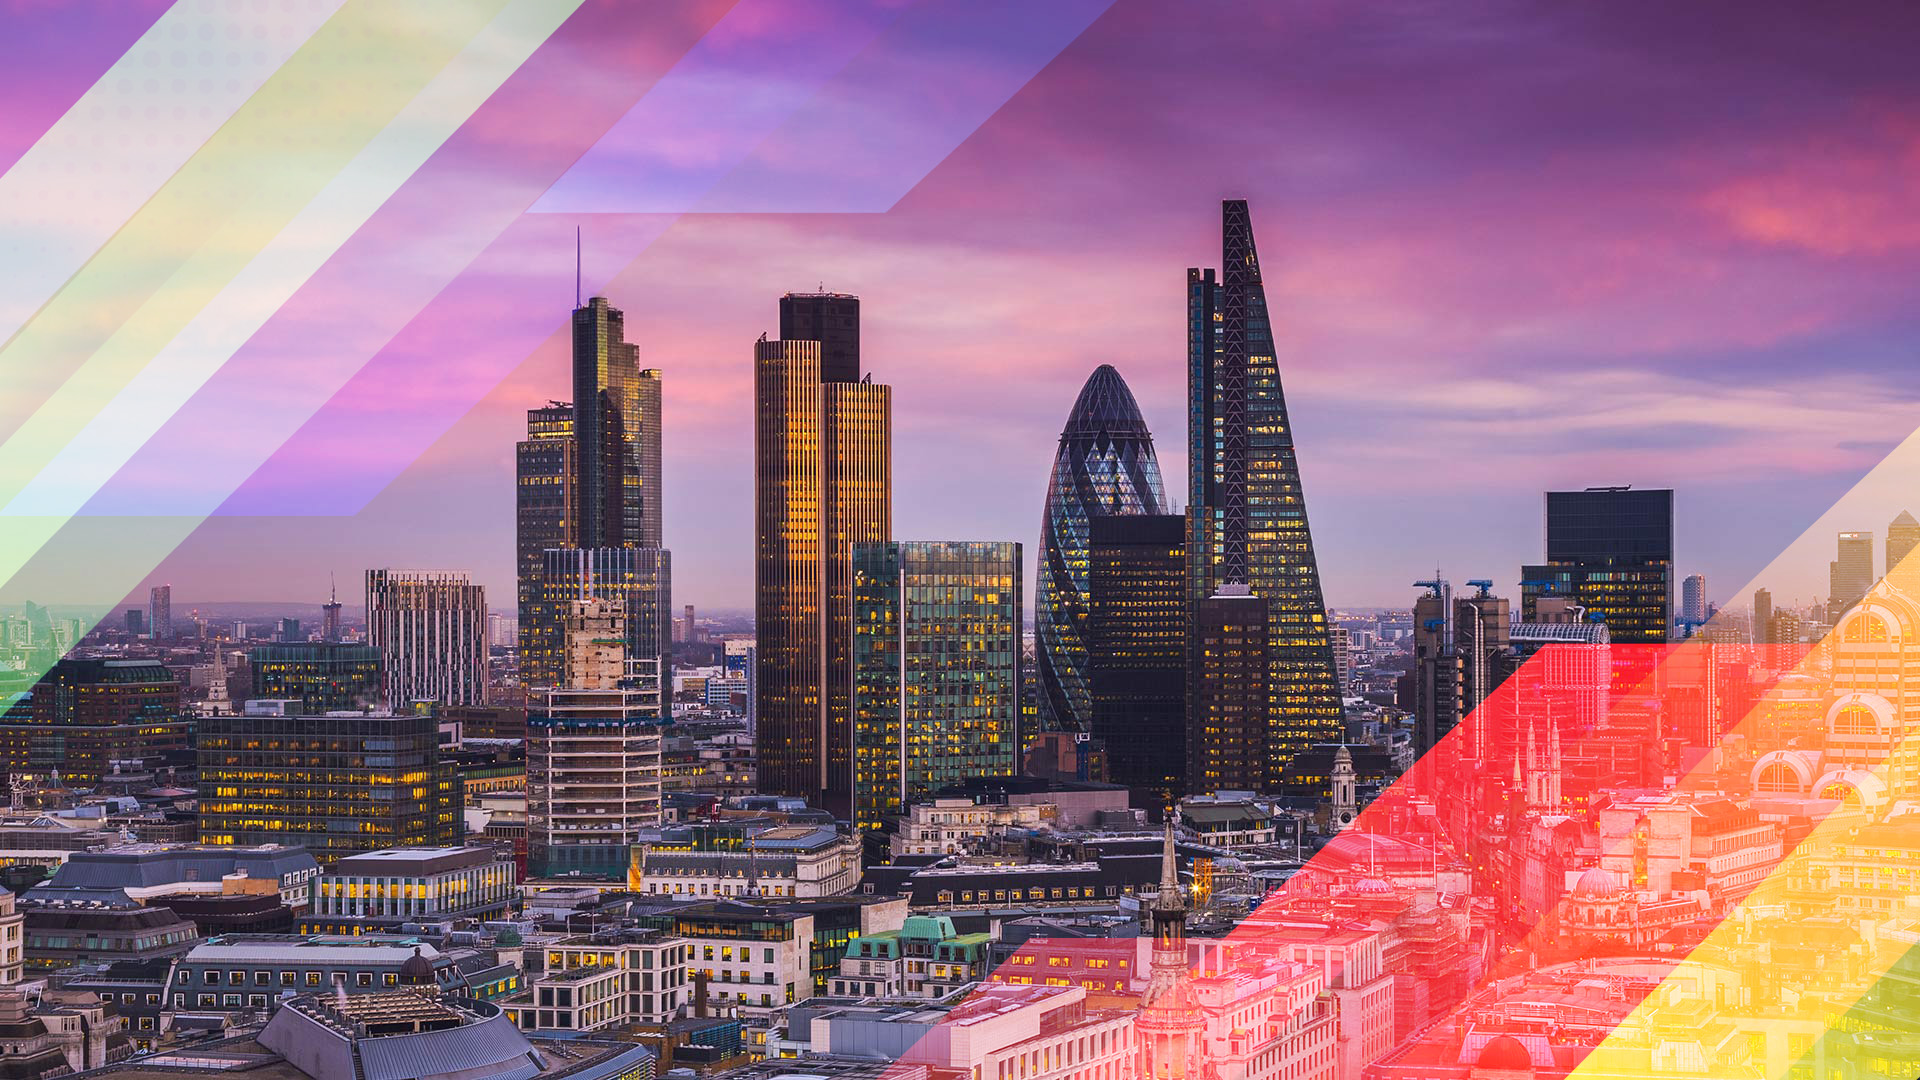 London Skyline image for election 